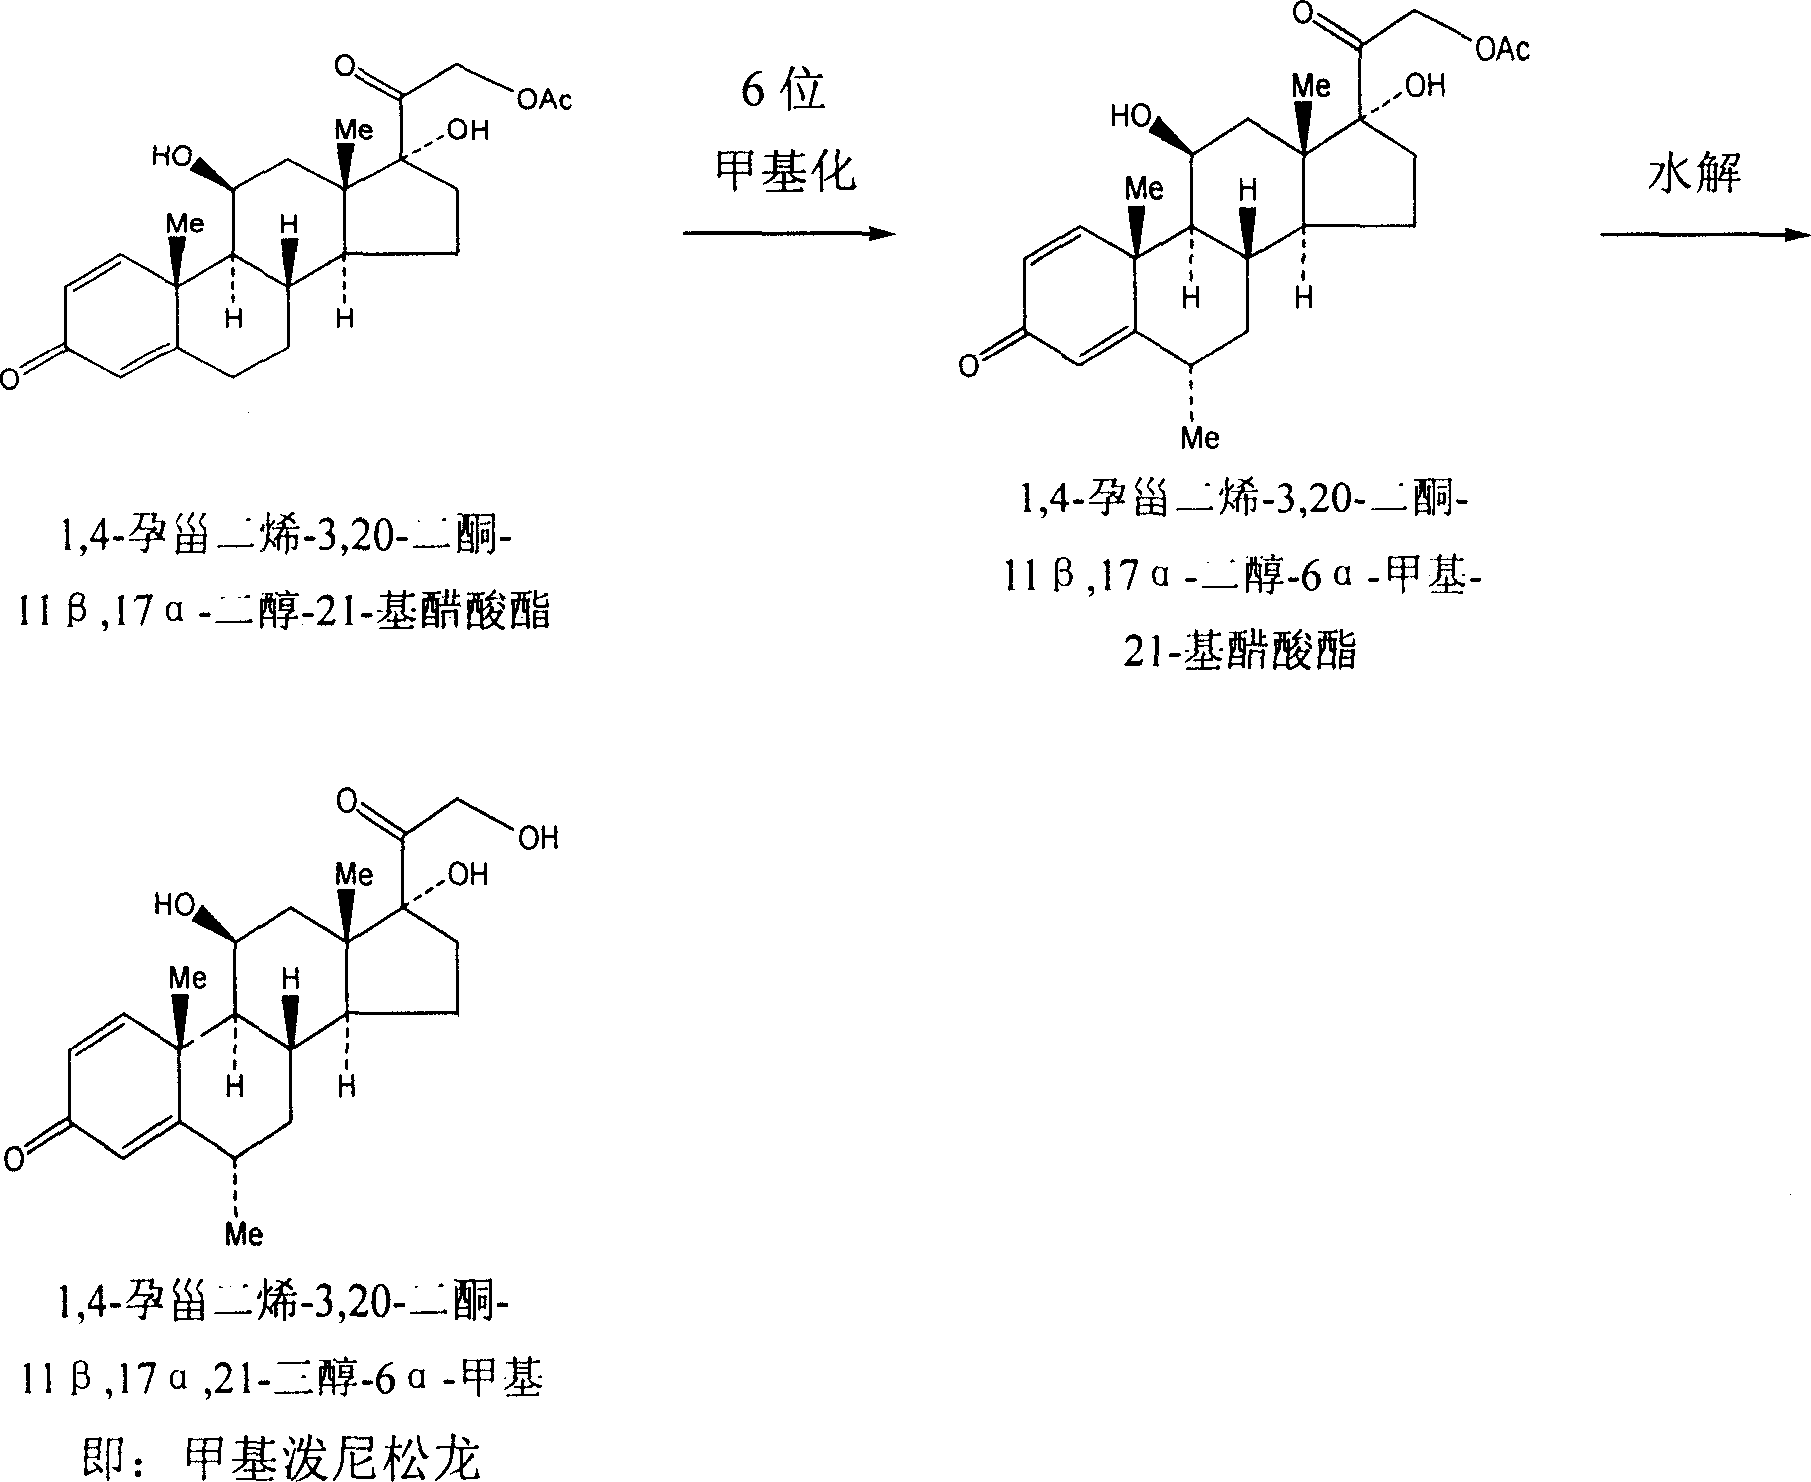 Methylprednisolone chemical synthesis method